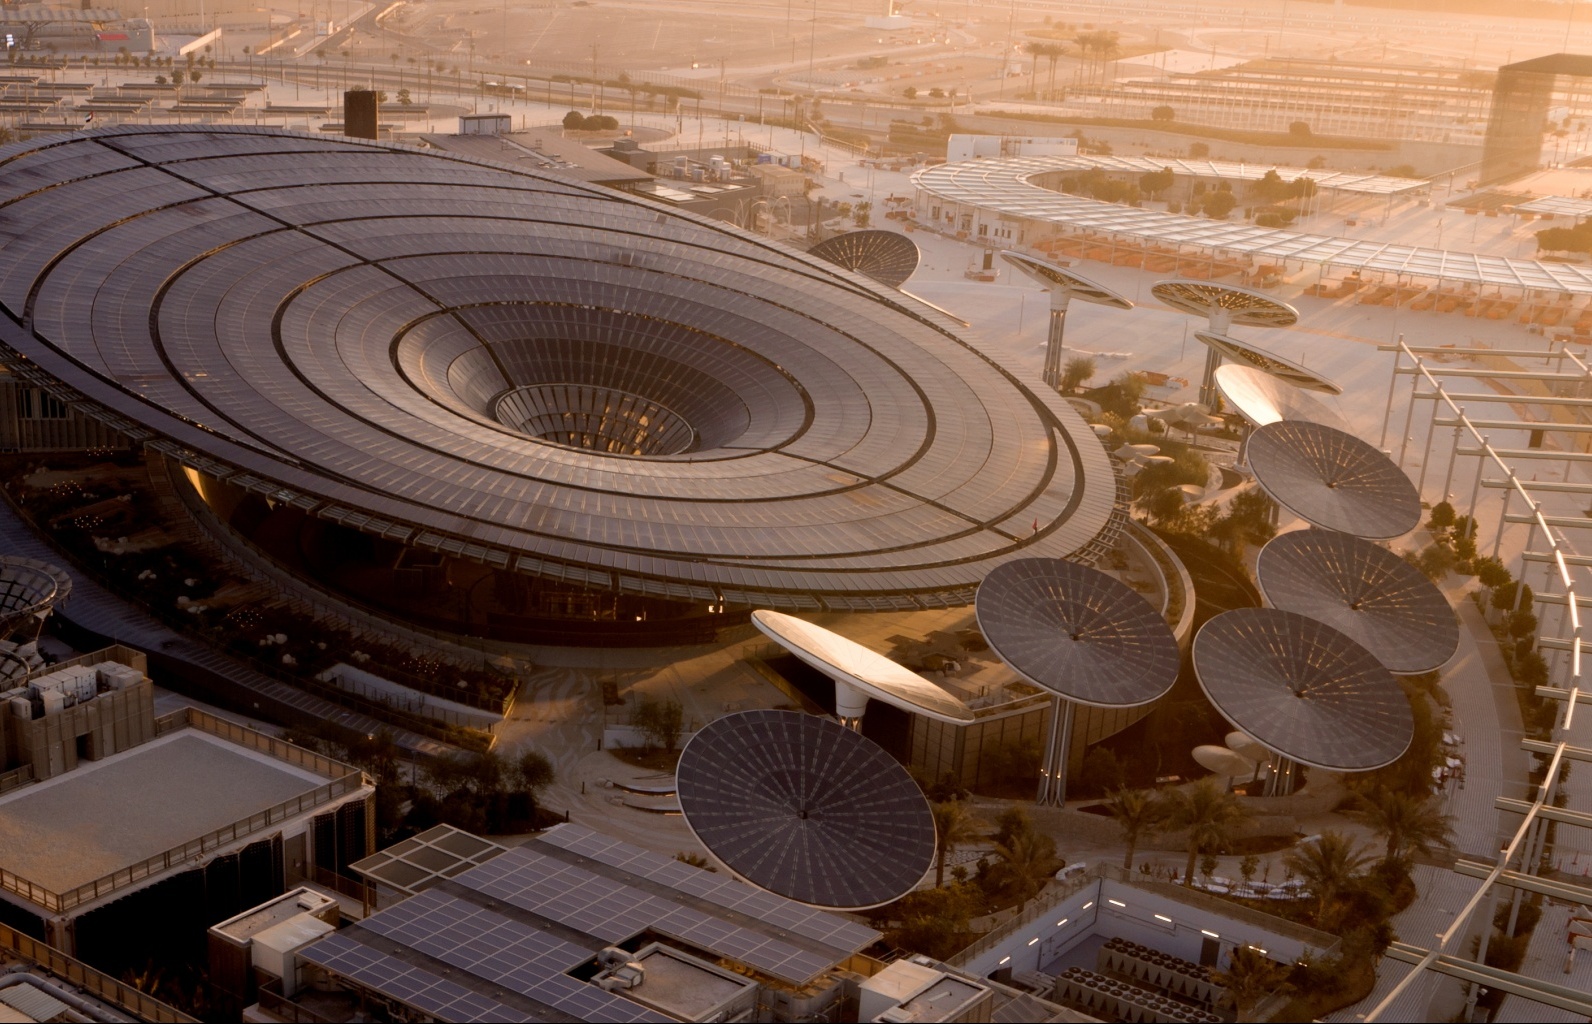 Expo 2020 Dubai opens as future city blueprint, digitalised with Siemens technology